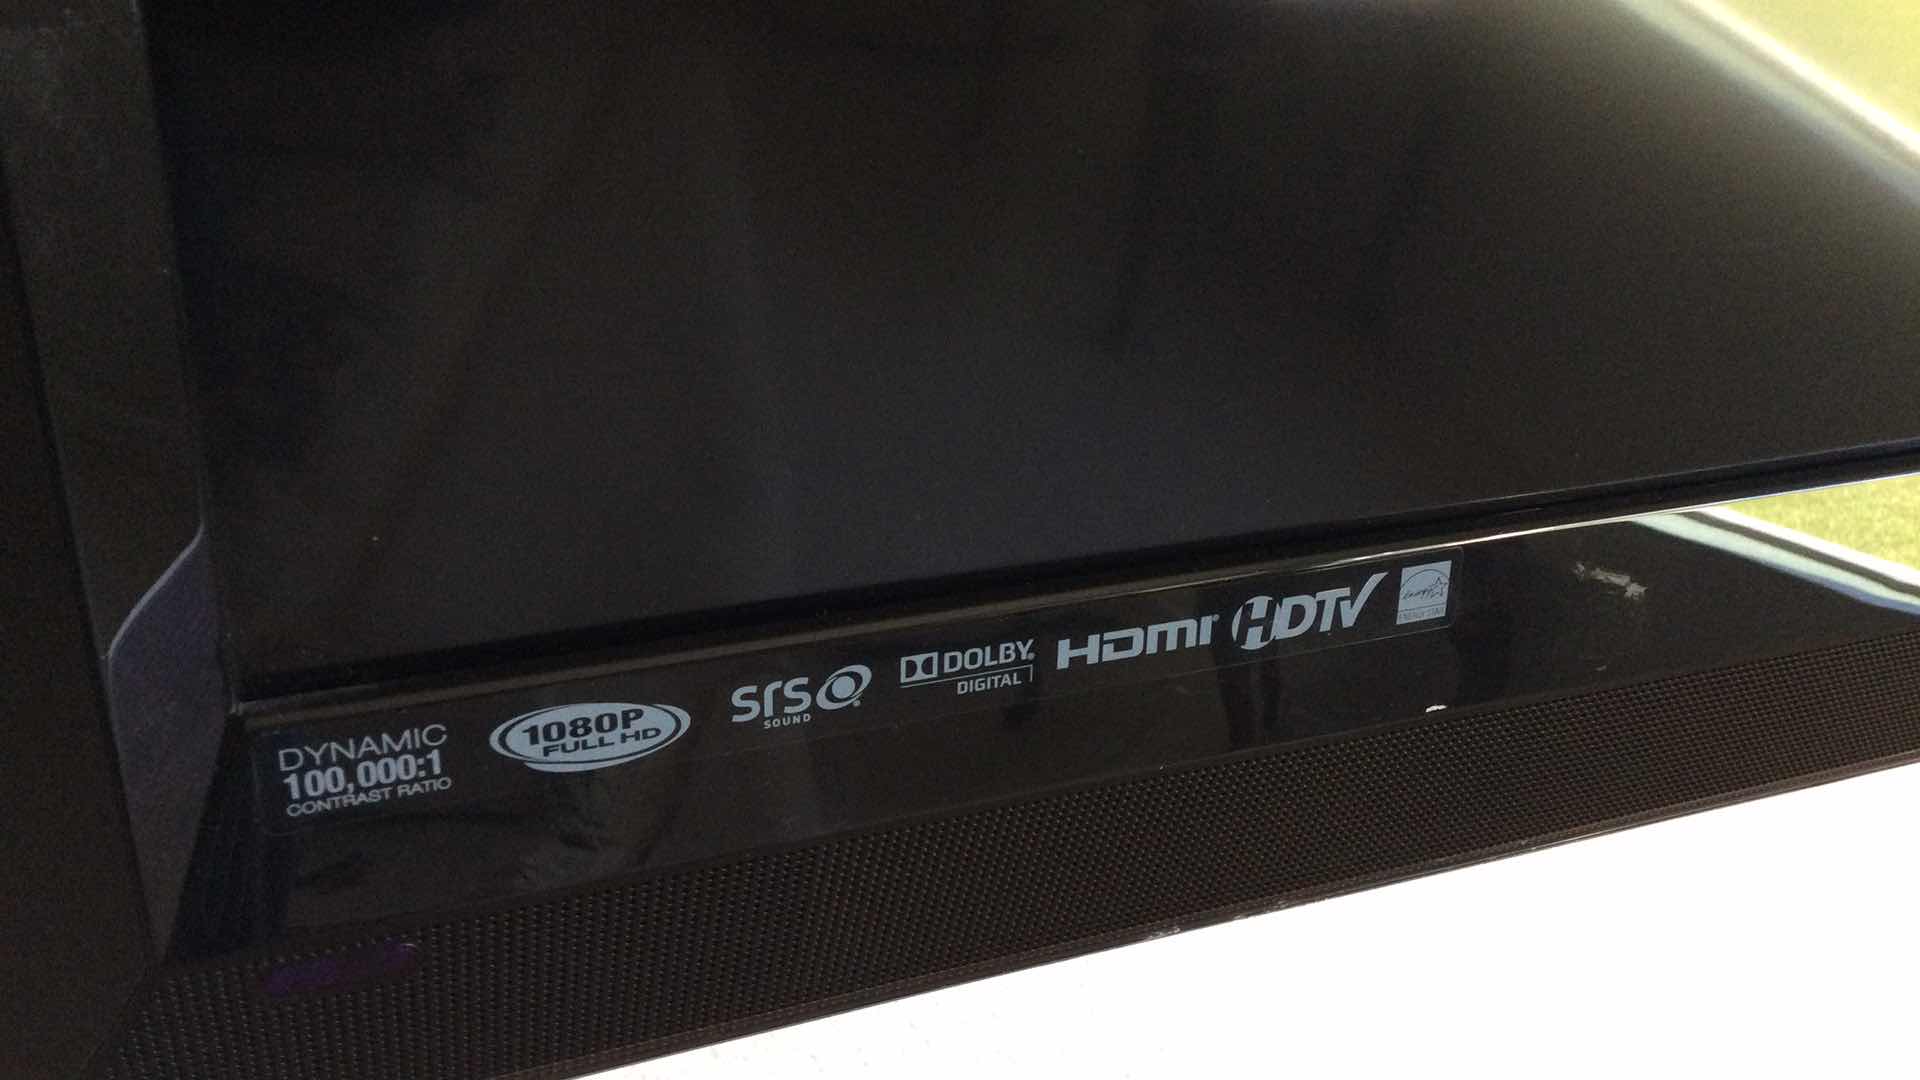 Photo 3 of VIZEO #E470VLE 47” HDMI/HD TV W/ TABLE MOUNT & SHAGHAI  FULL MOTION WALL MOUNT #EMW5306